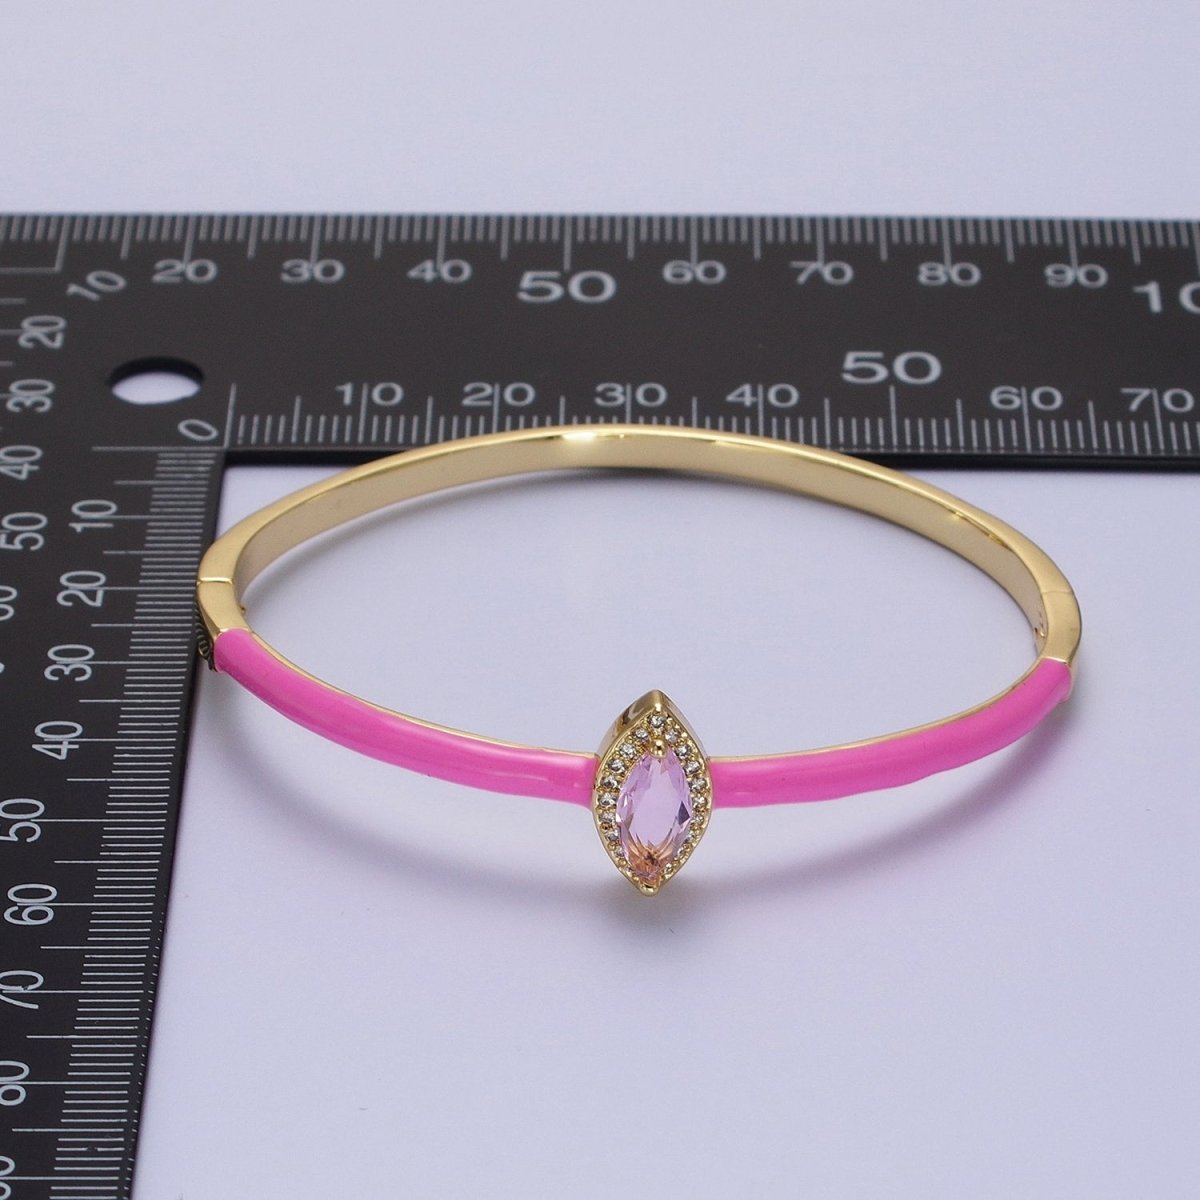 Barbie core Gold Filled Marquise White, Green, Pink Micro Paved Enamel Gold Bangle Bracelet | WA-1337 WA-1338 WA-1339 Clearance Pricing - DLUXCA